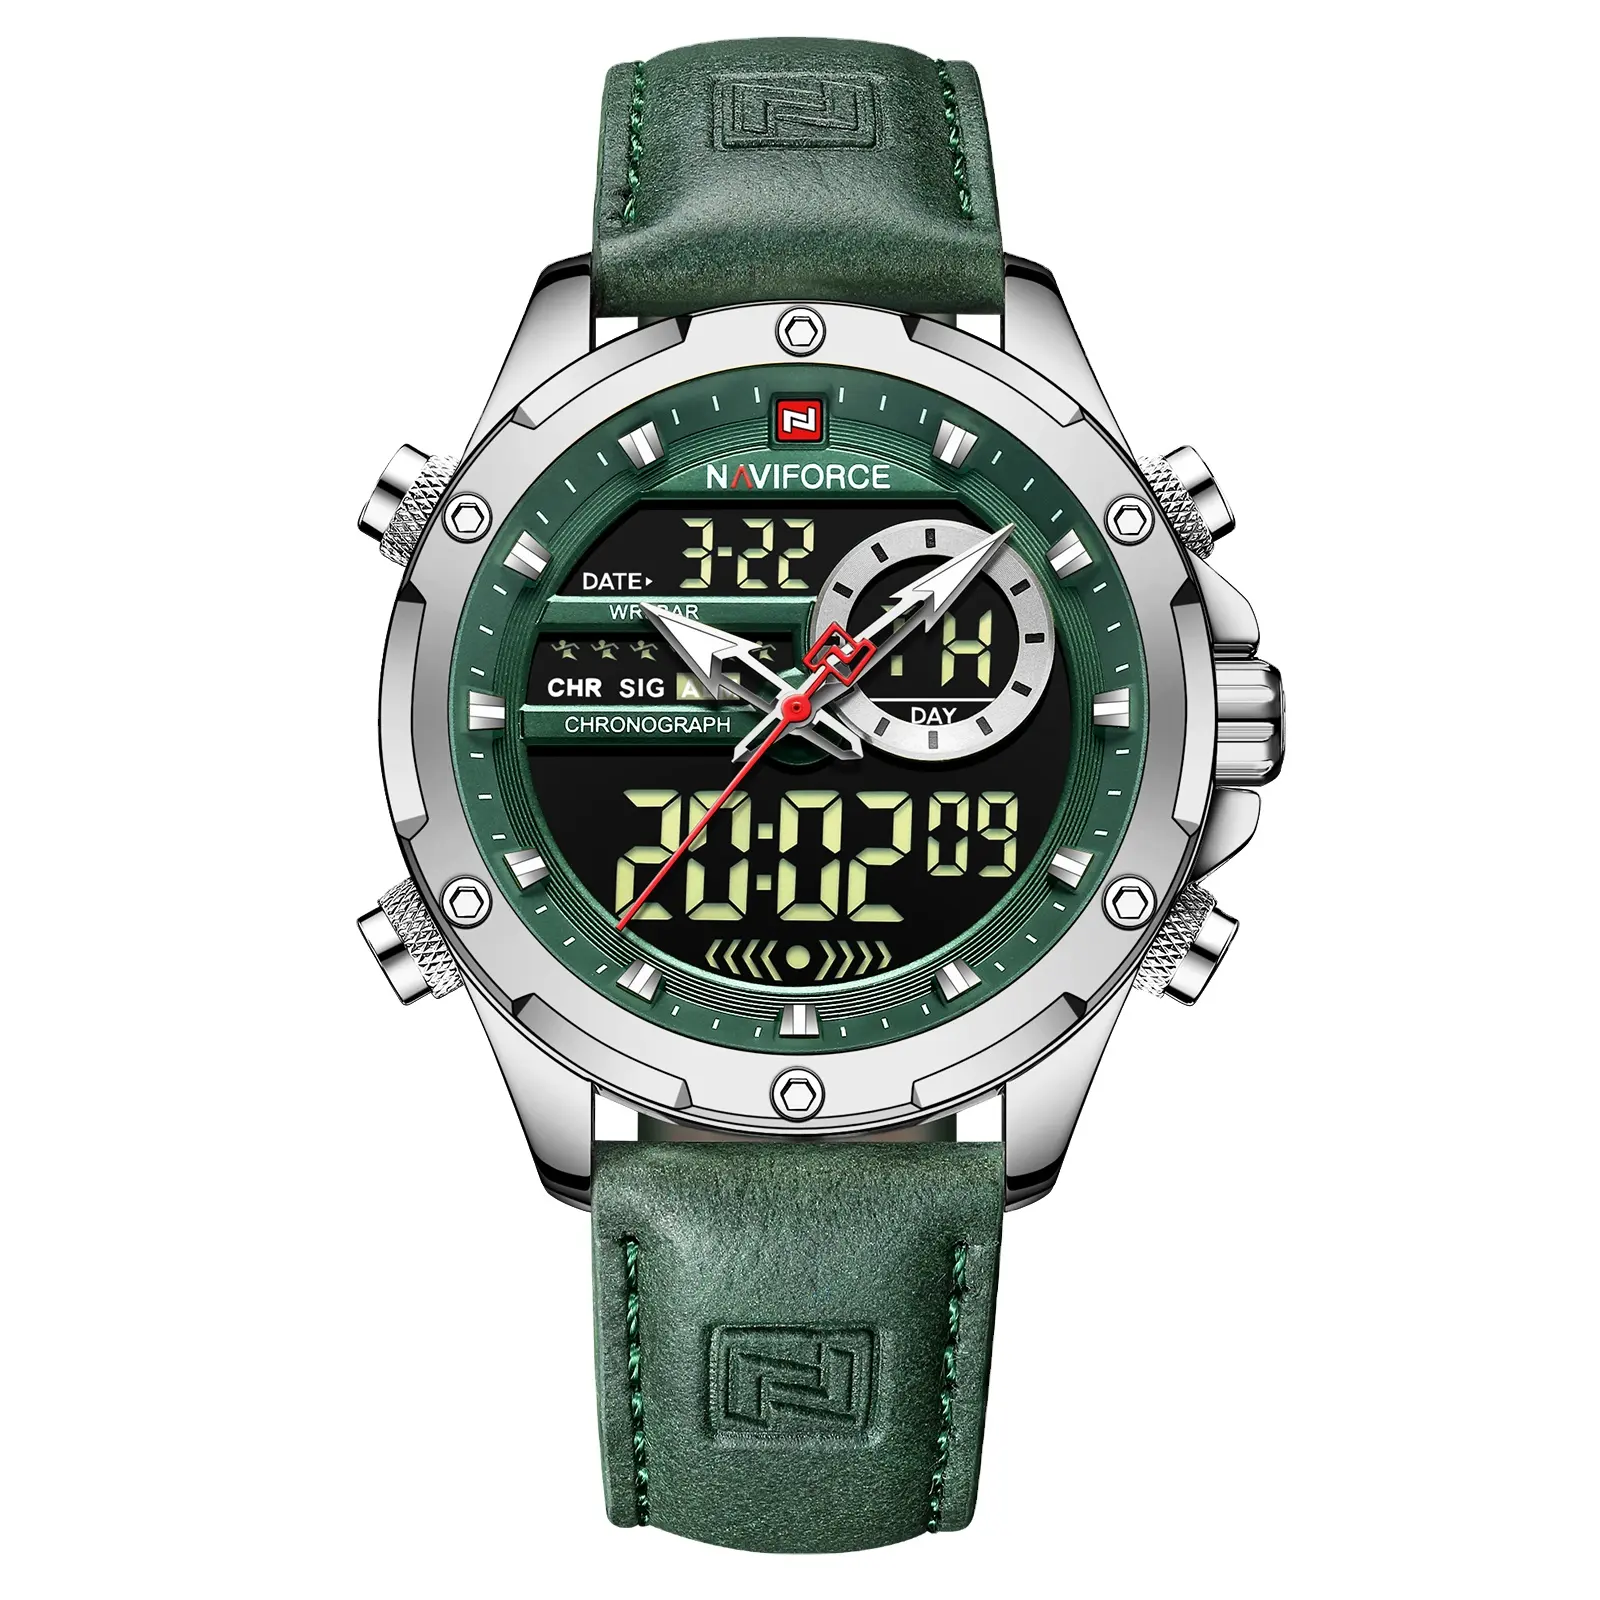 Original Brand NAVIFORCE 9208 LED Dual Display Chronograph Quartz Wrist Watch Casual Digital Sports Watches For Men